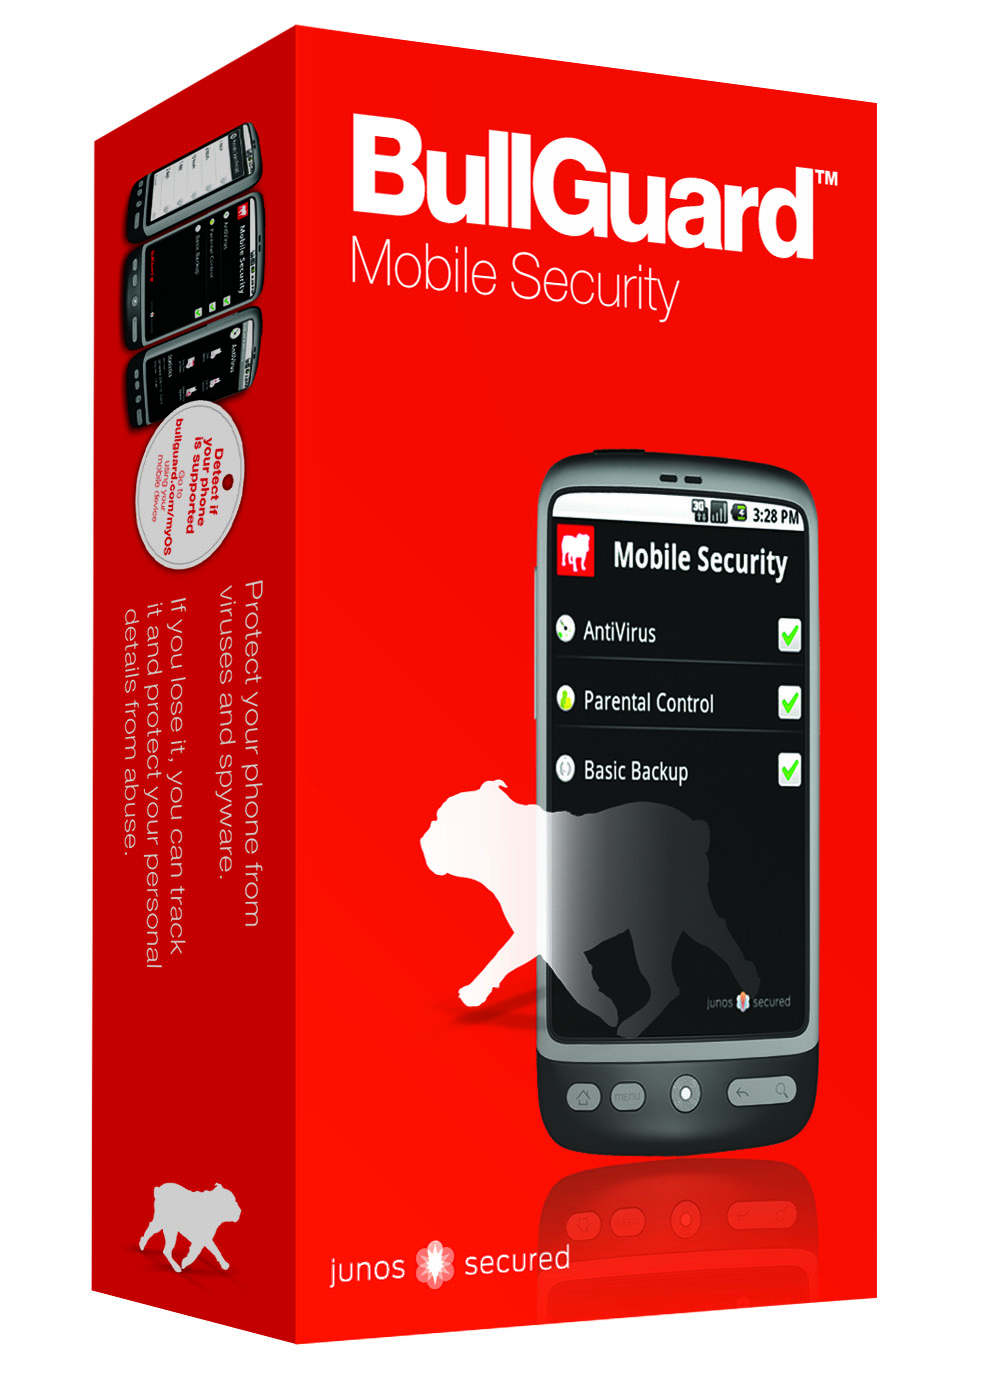 Bullguard Mobile Security